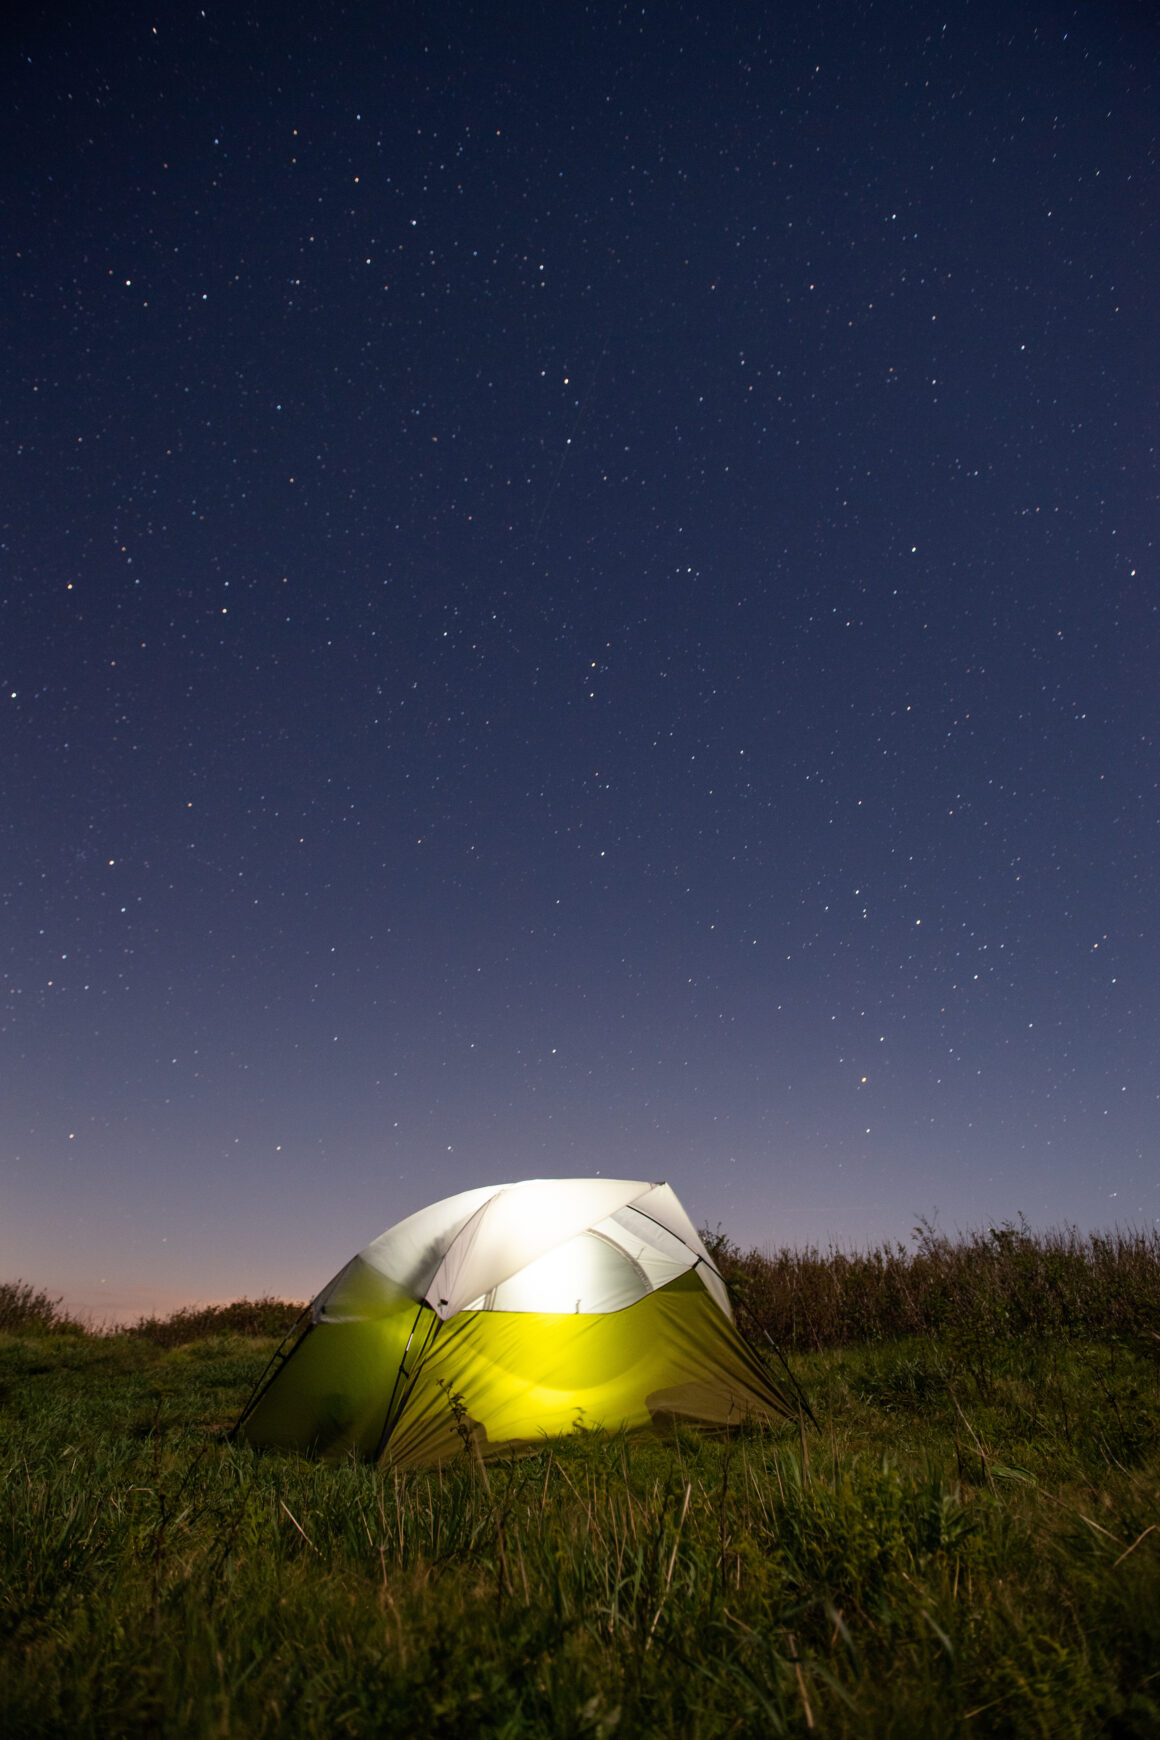 Balck Balsam Knob Camping Under The Stars